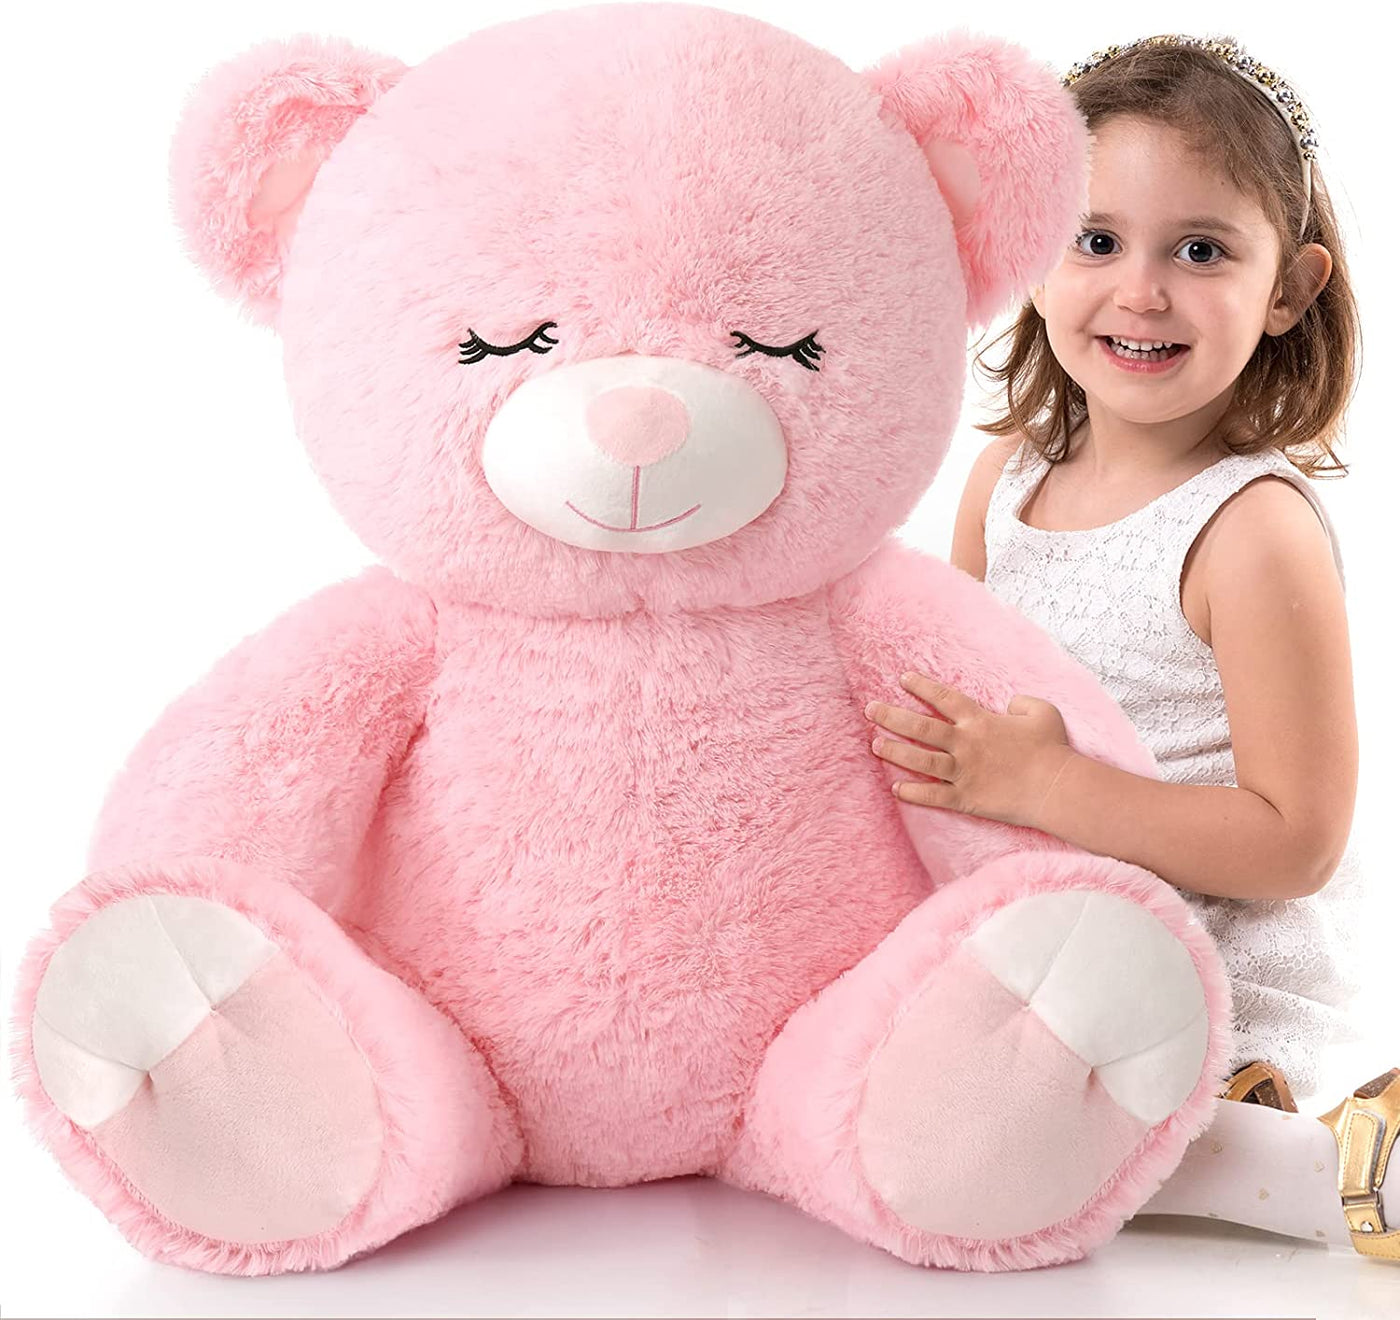 Teddy Bear Stuffed Animal Toy, Pink, 23.6 Inches - MorisMos Plush Toys